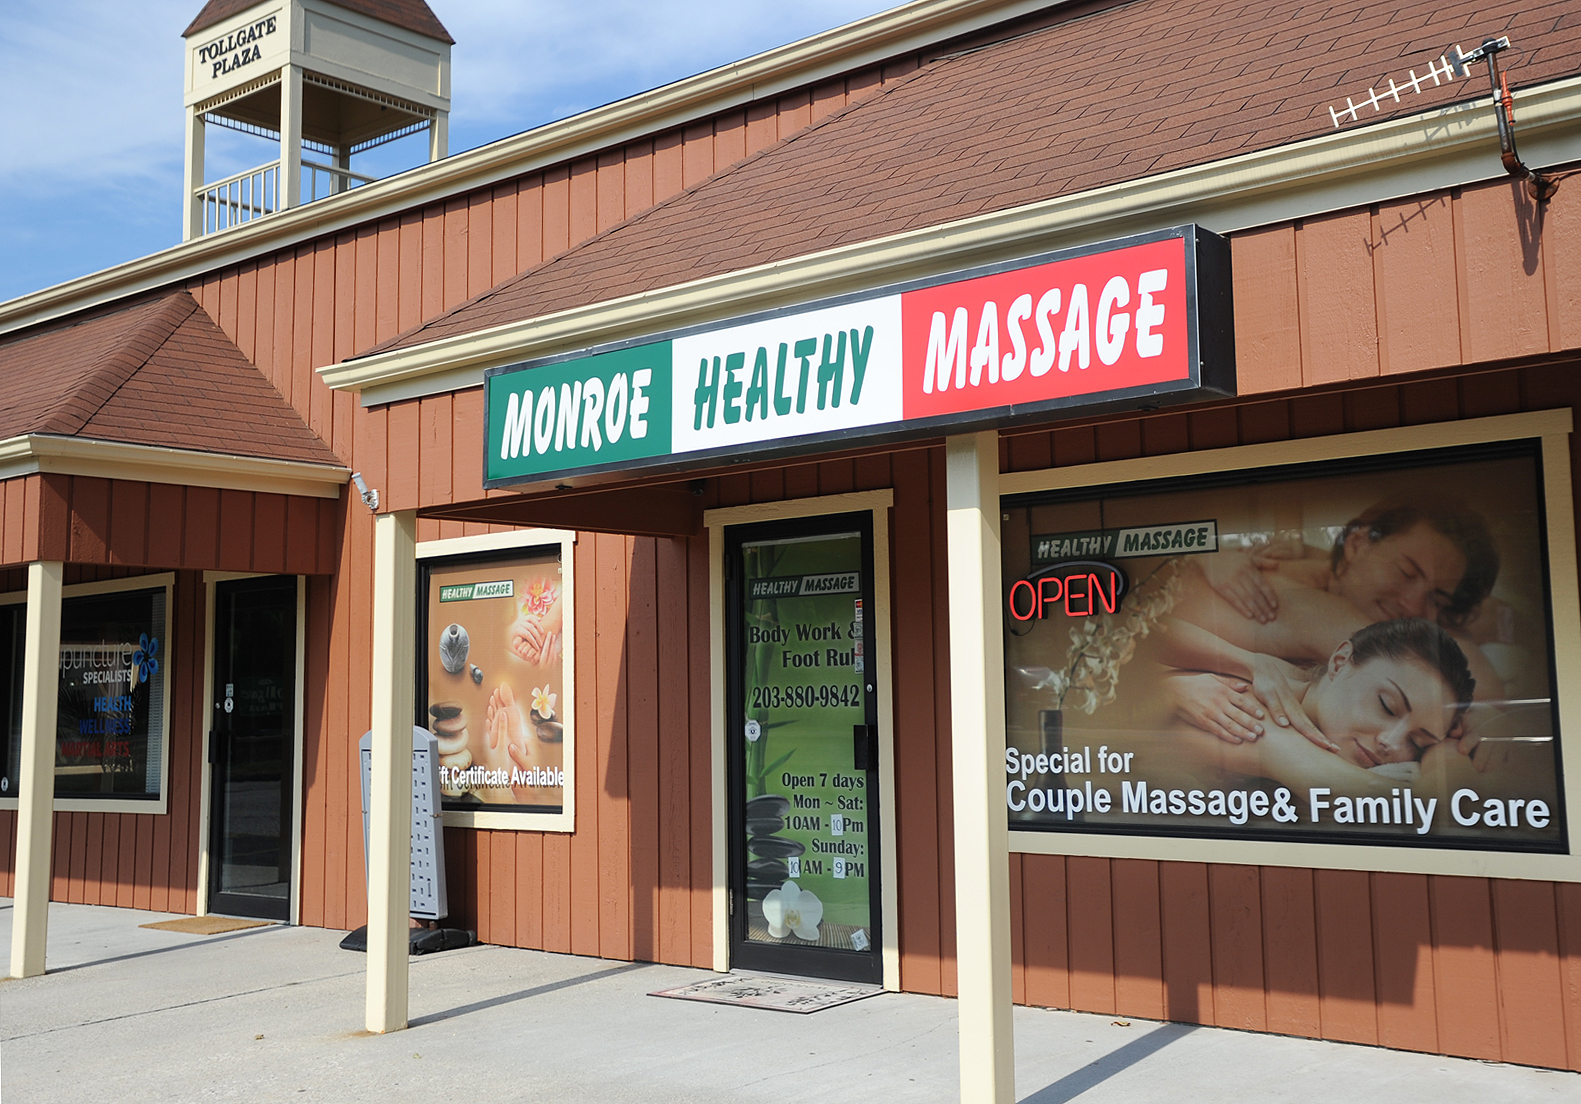 Erotic massage parlor board chicago